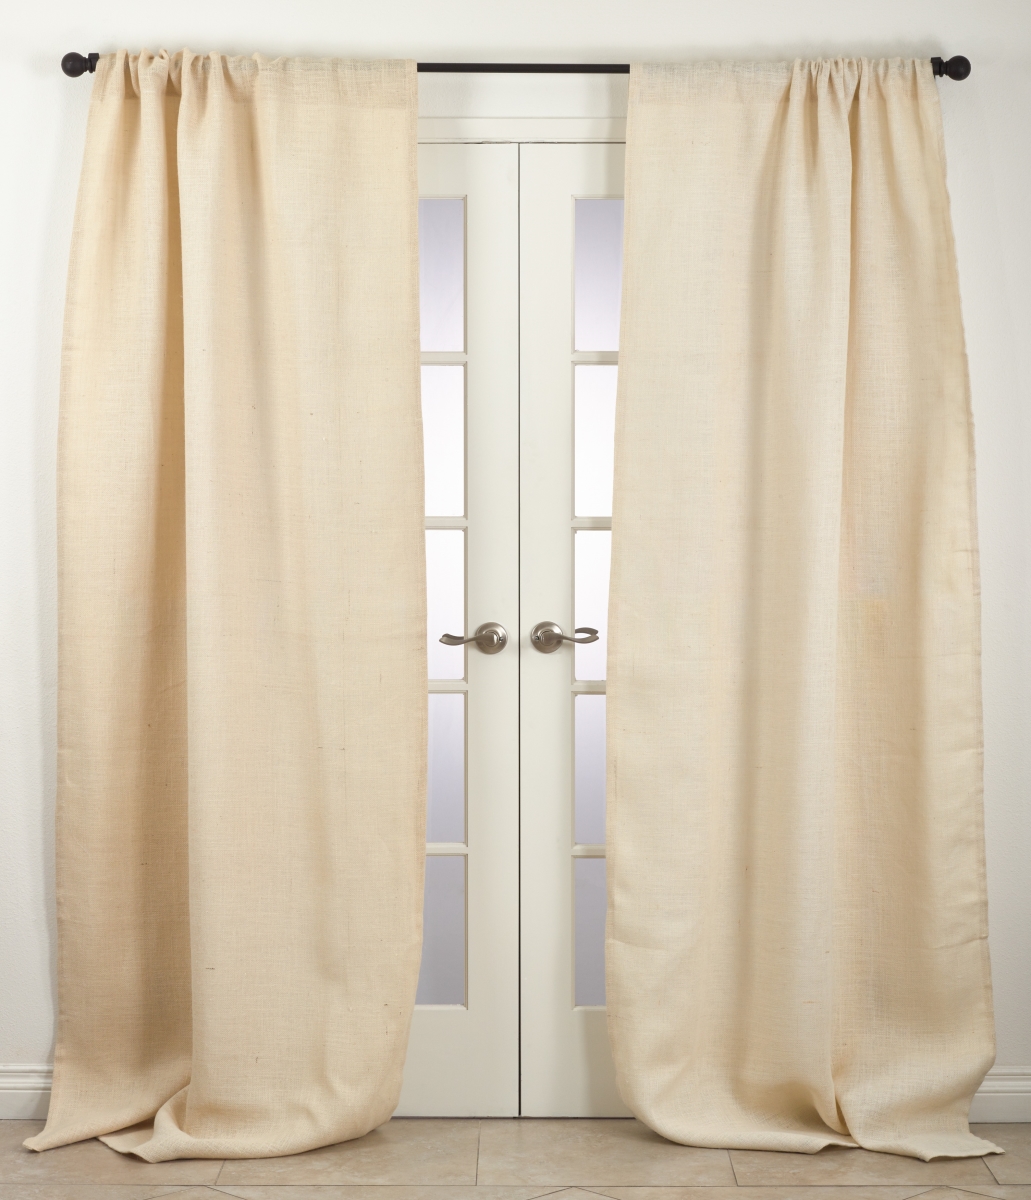 0811.i42108 Burlap Jute Chic Lined Curtain Panel - Ivory